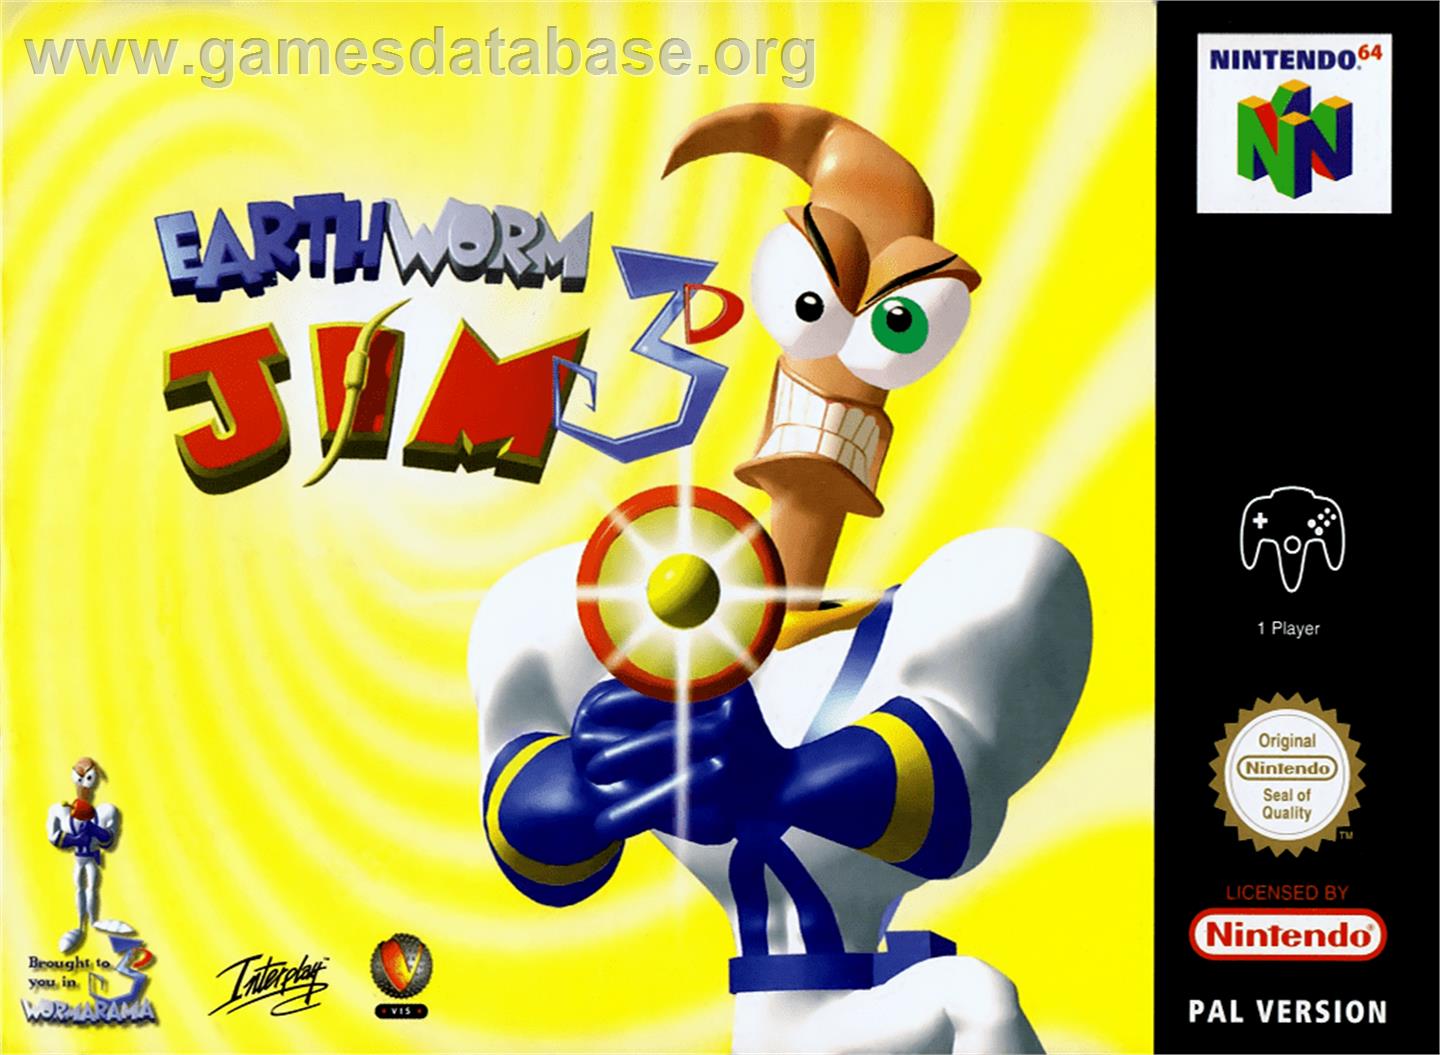 Earthworm Jim 3D - Nintendo N64 - Artwork - Box